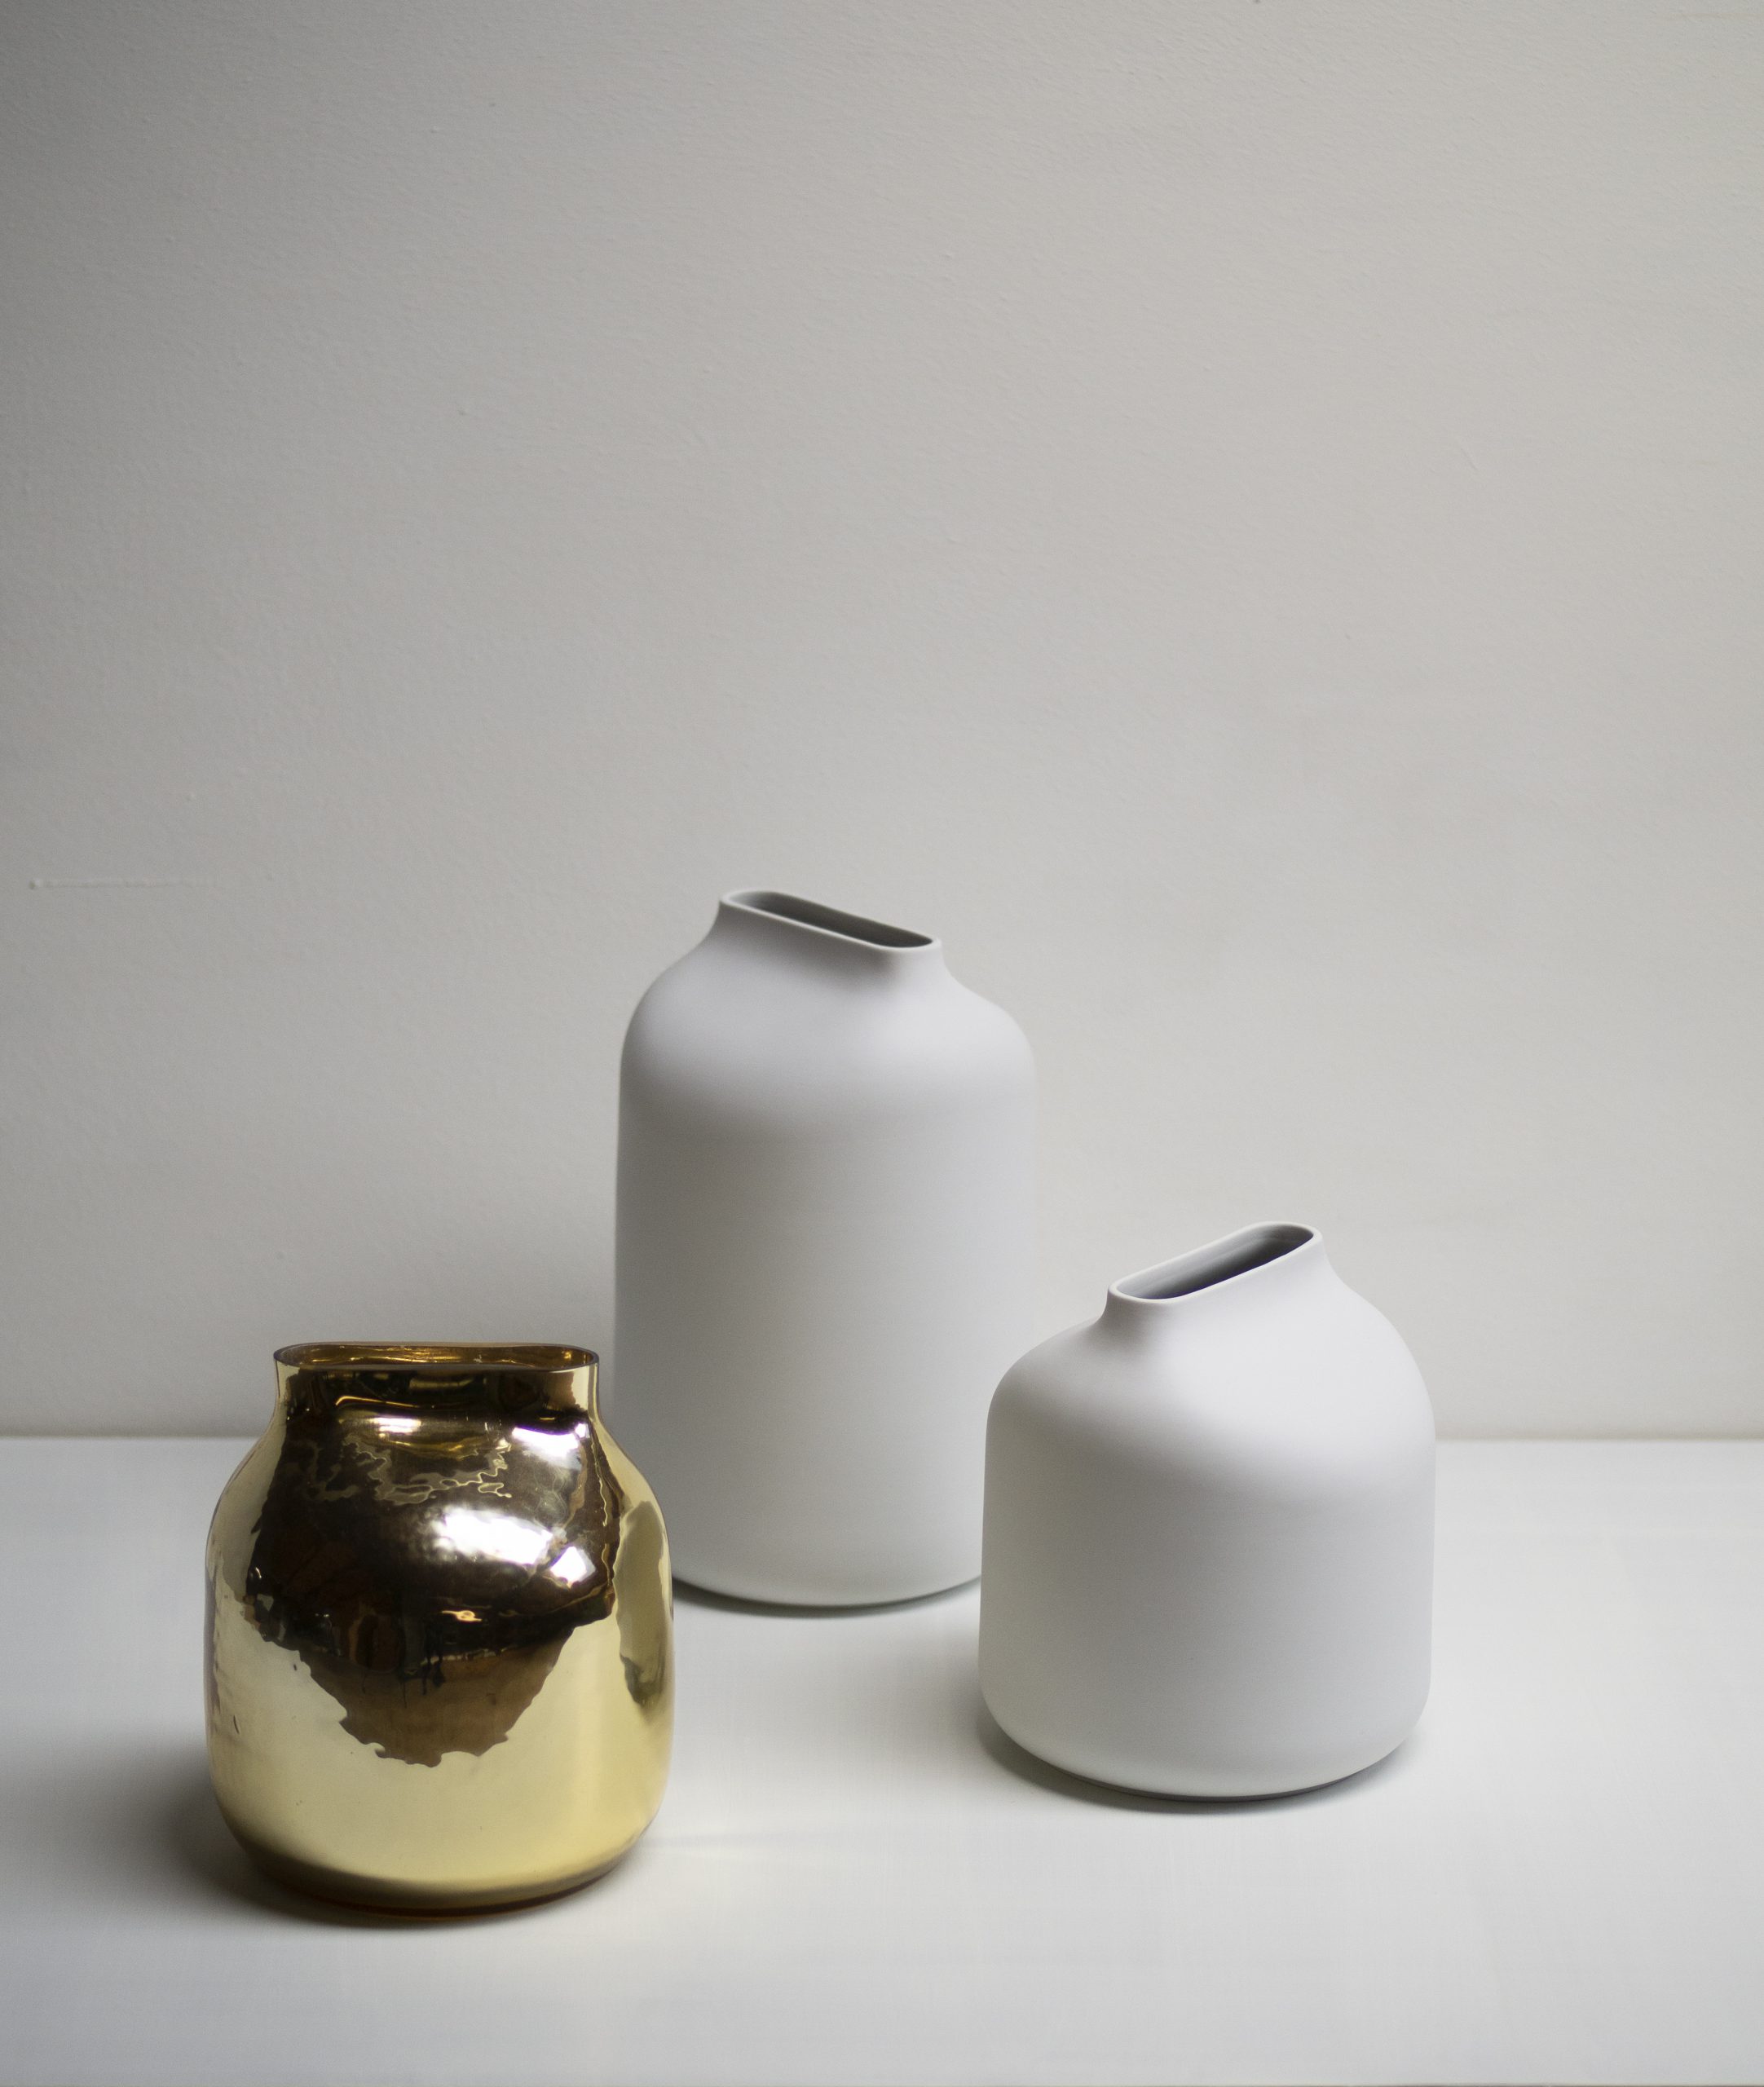 Ceramic and Mercury Glass Fila Vases by Debiasi Sandri for Ligne Roset